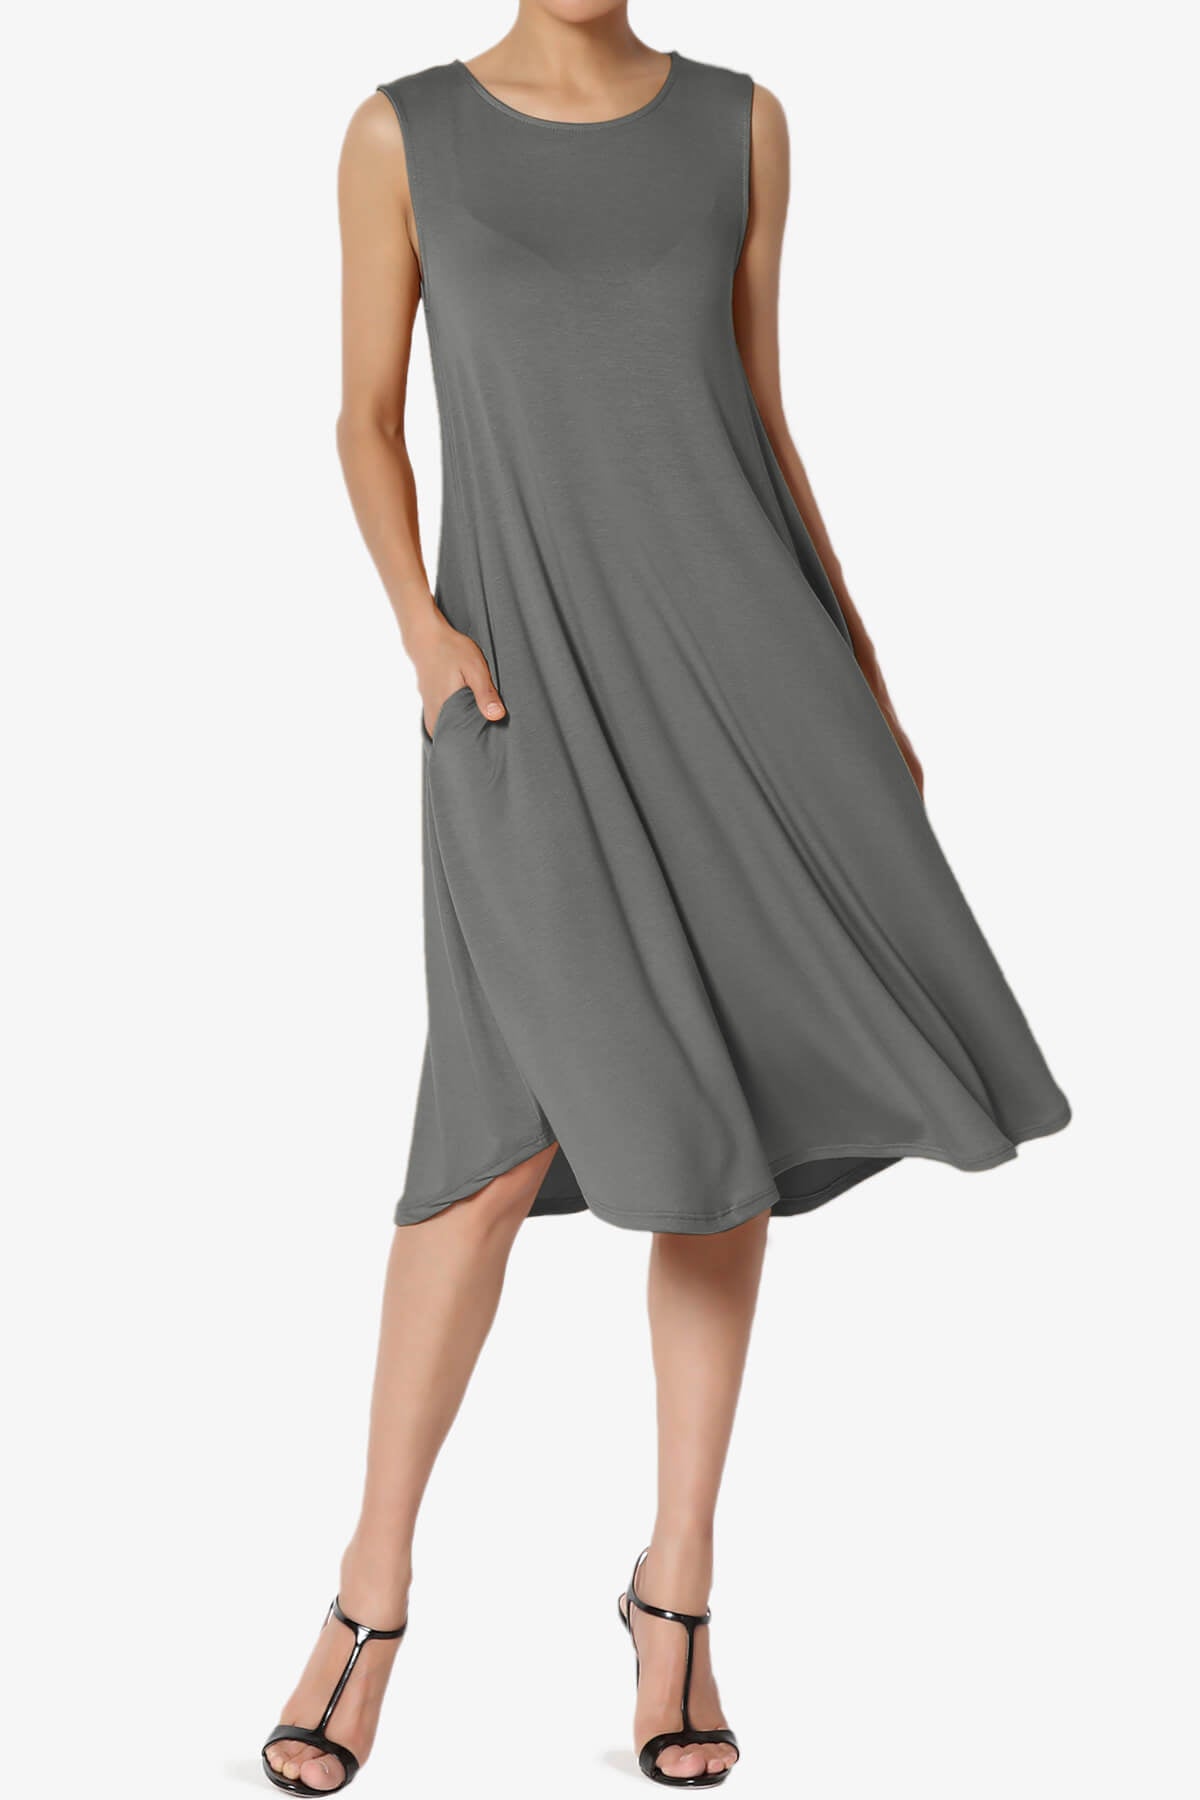 can i wear leggings under a sleeveless swing dress - Google Search